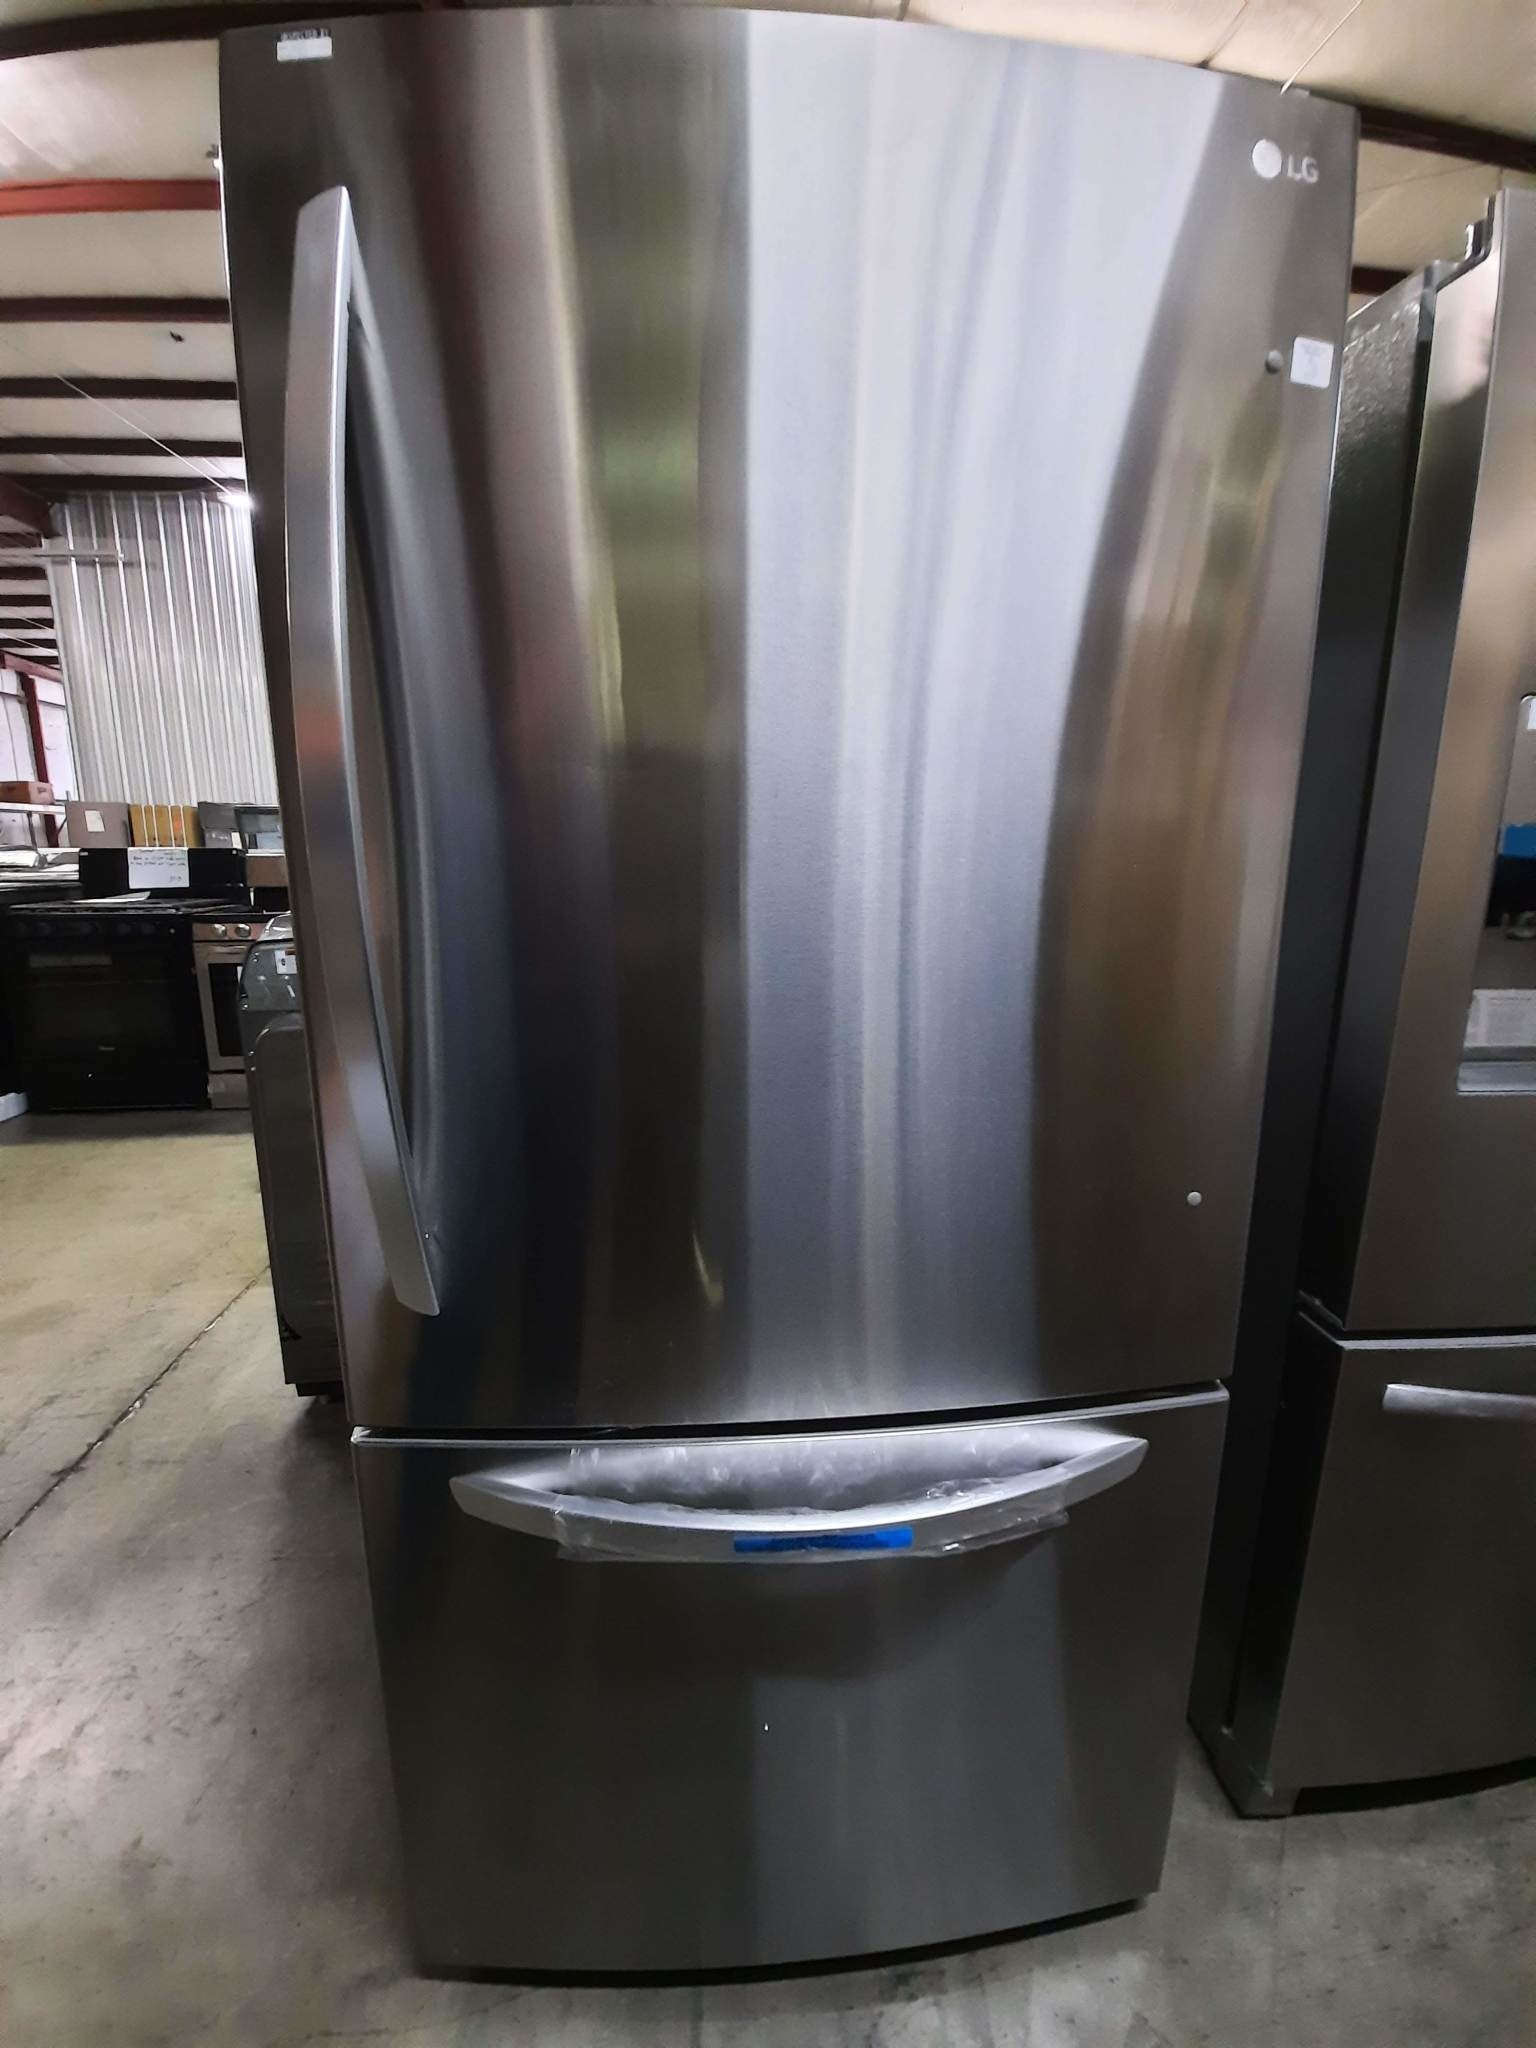 LG 33 in. 25.5 cu. ft. Bottom Freezer Refrigerator - Stainless Steel